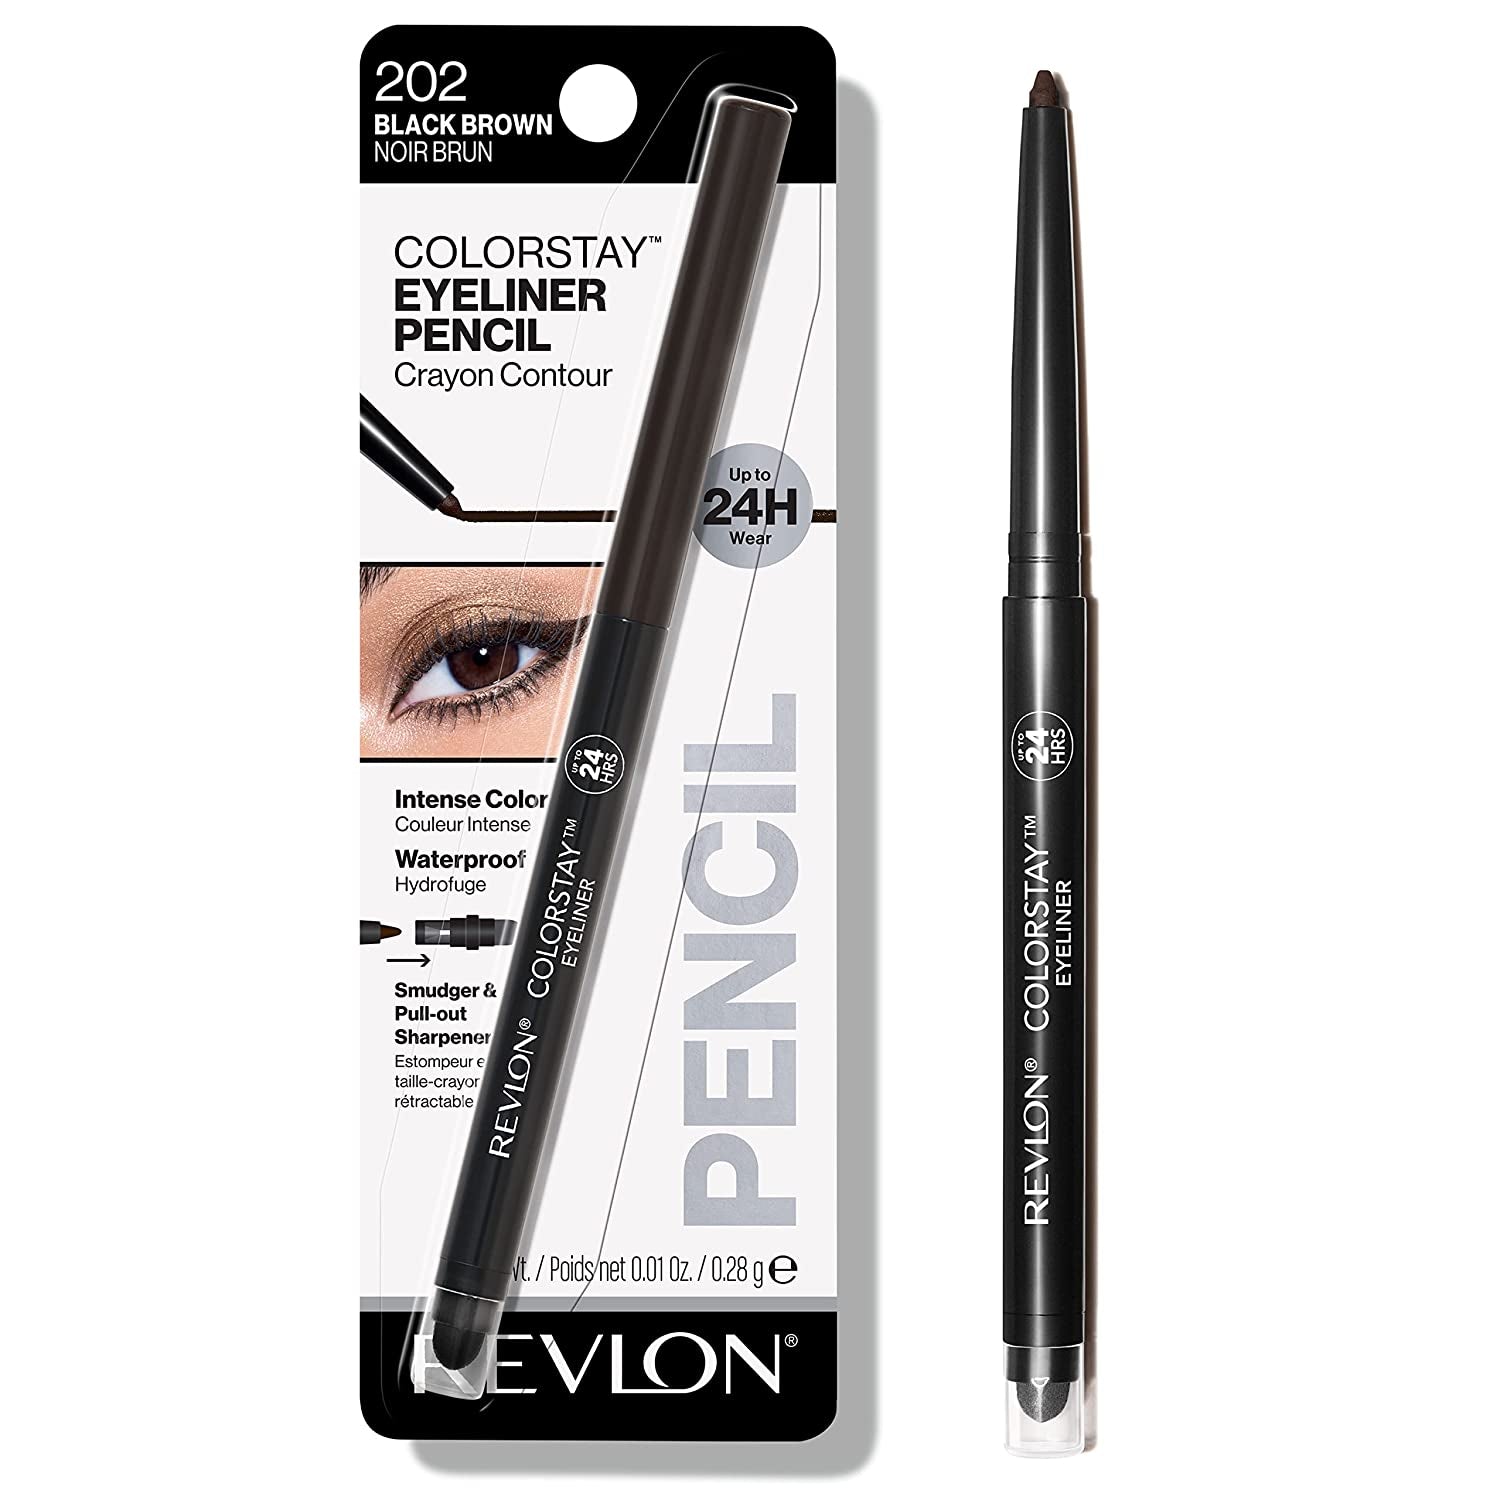 Pencil Eyeliner, Colorstay Eye Makeup with Built-In Sharpener, Waterproof, Smudge-Proof, Longwearing with Ultra-Fine Tip, 202 Black Brown, 0.01 Oz